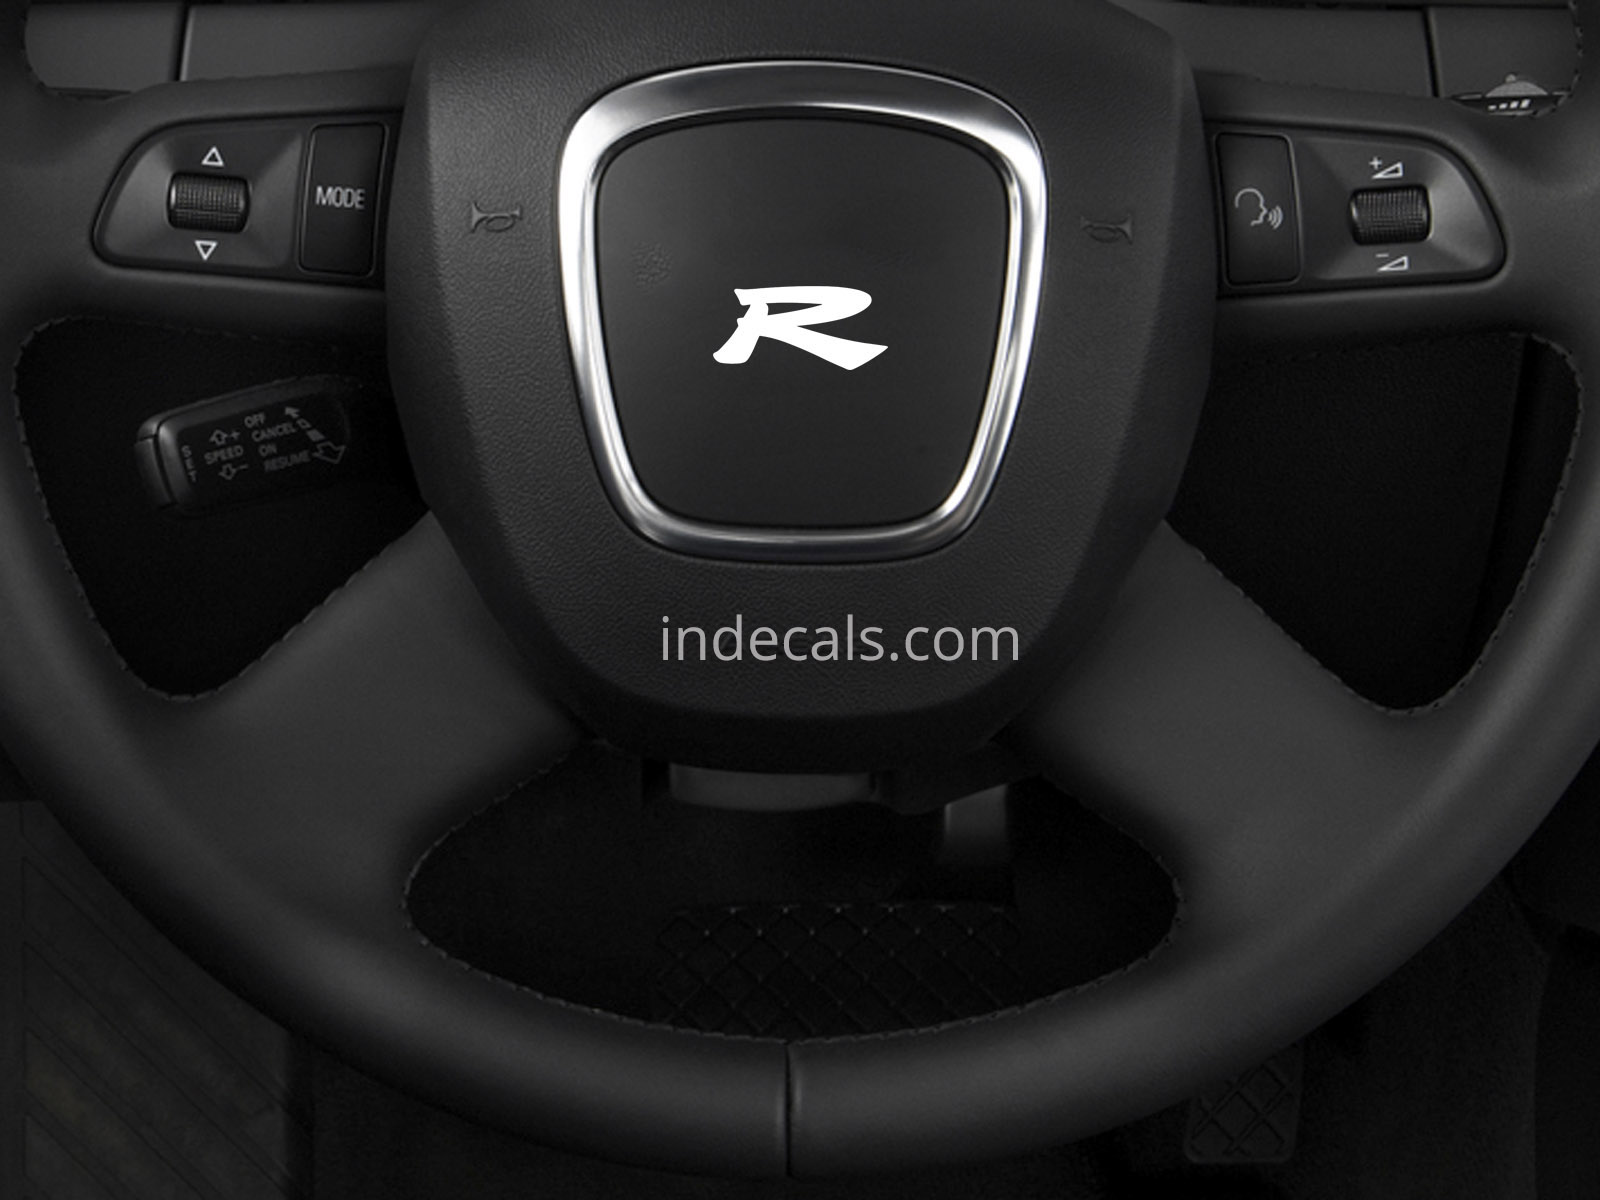 3 x Honda Type R Stickers for Steering Wheel - White